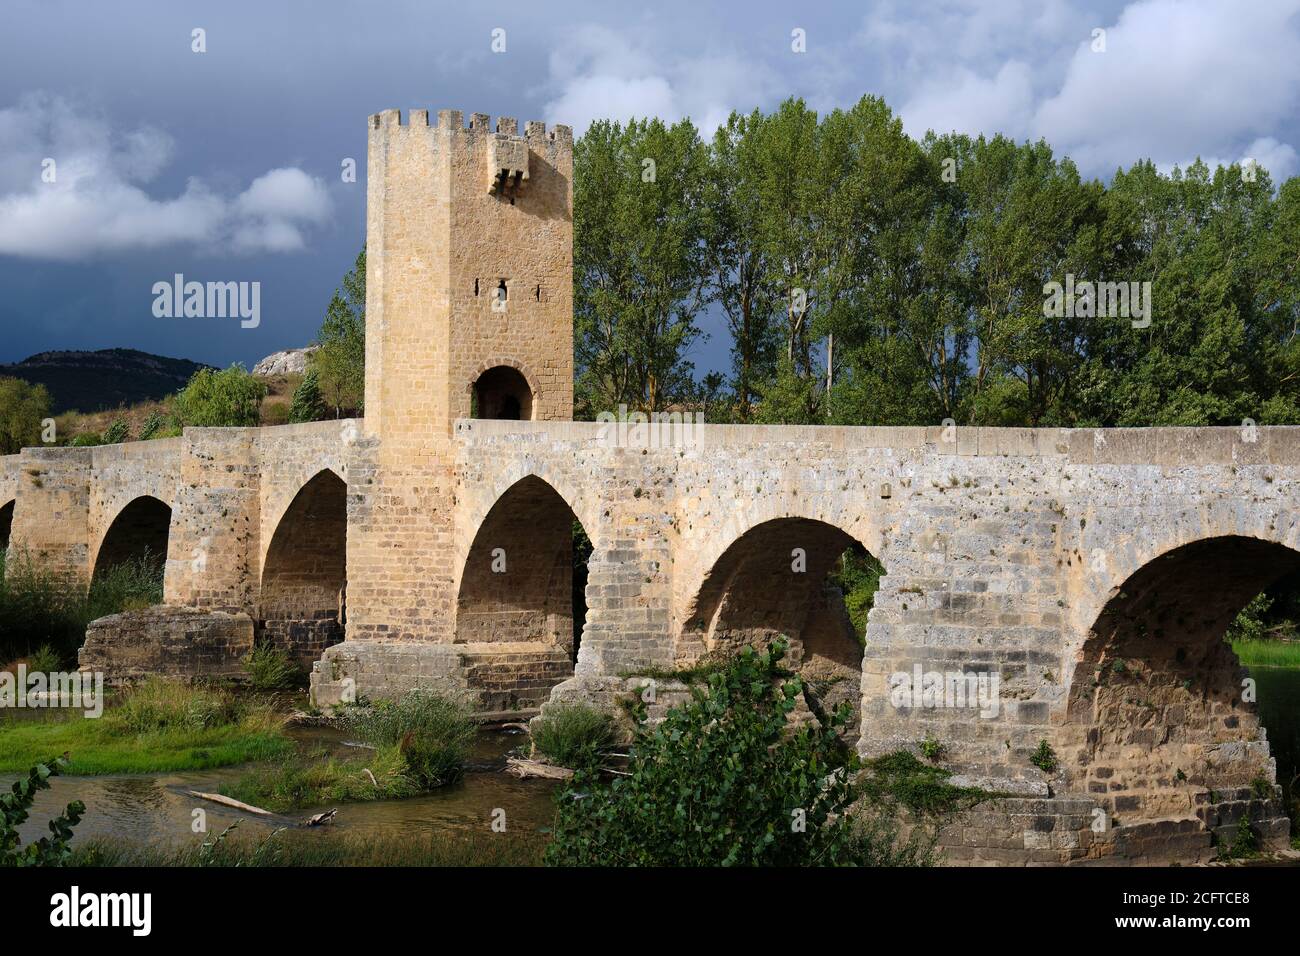 Medieval bridge and Ebro river. Stock Photo